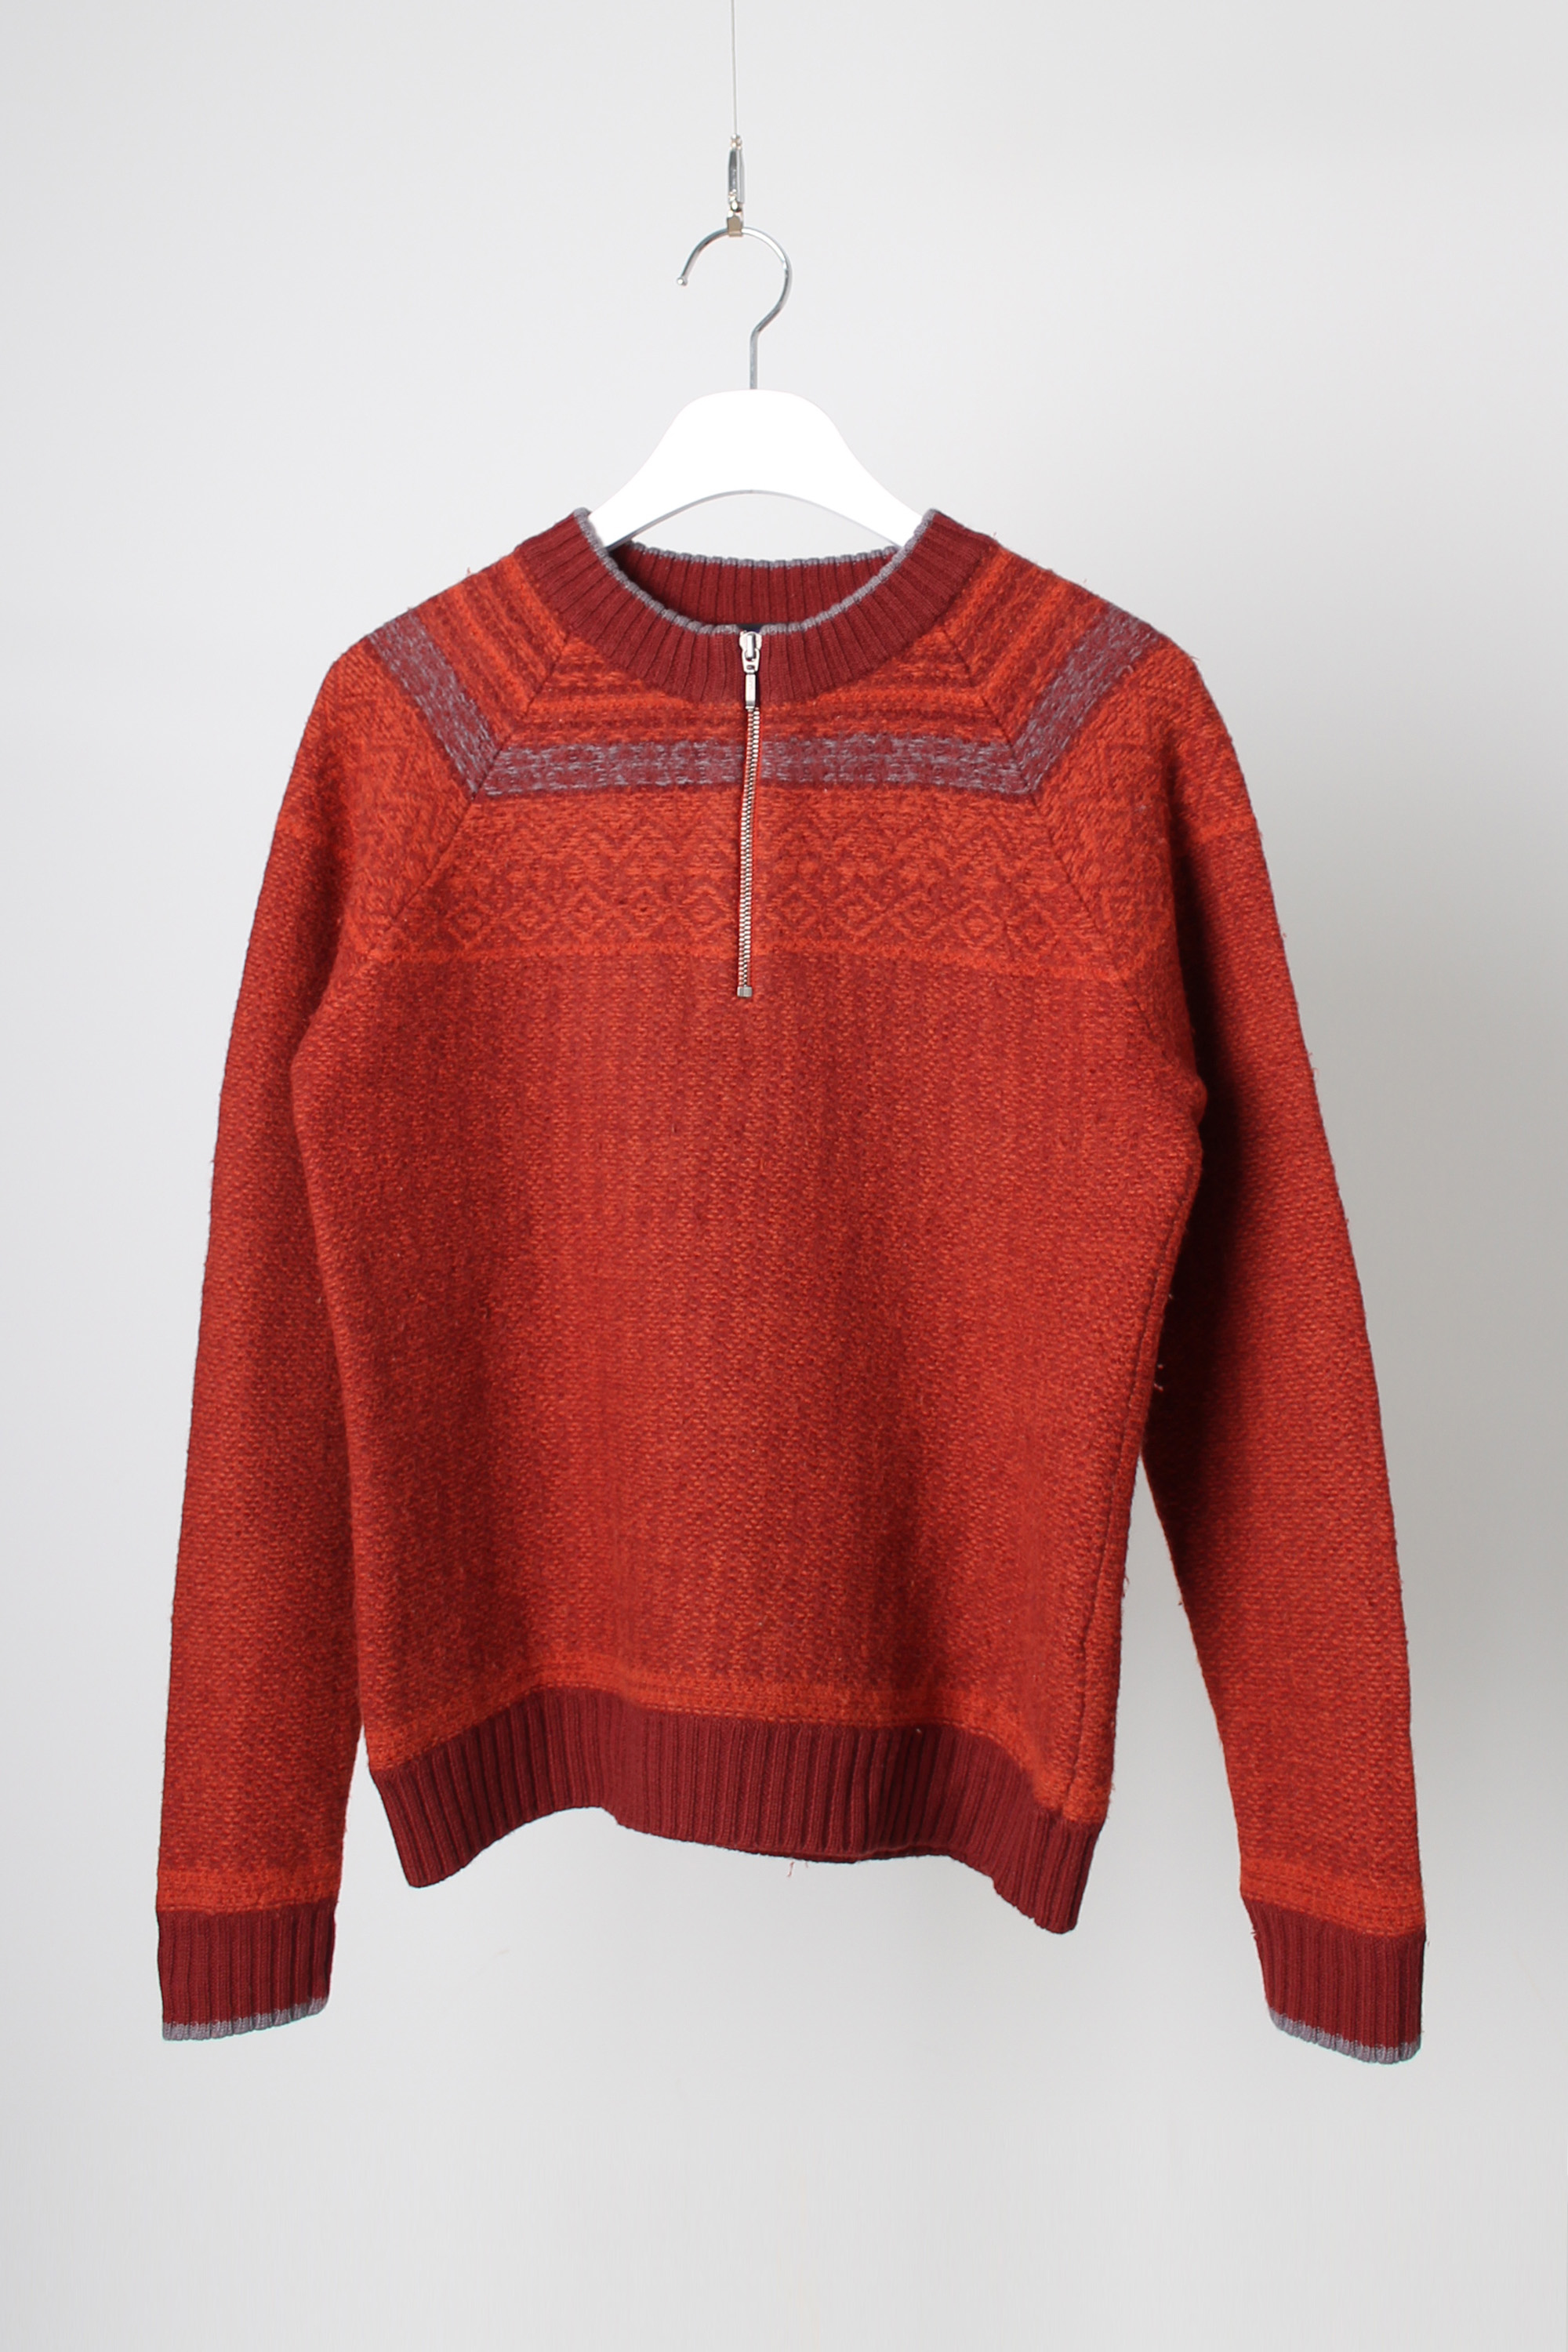 Vintage Patagonia pullover knit